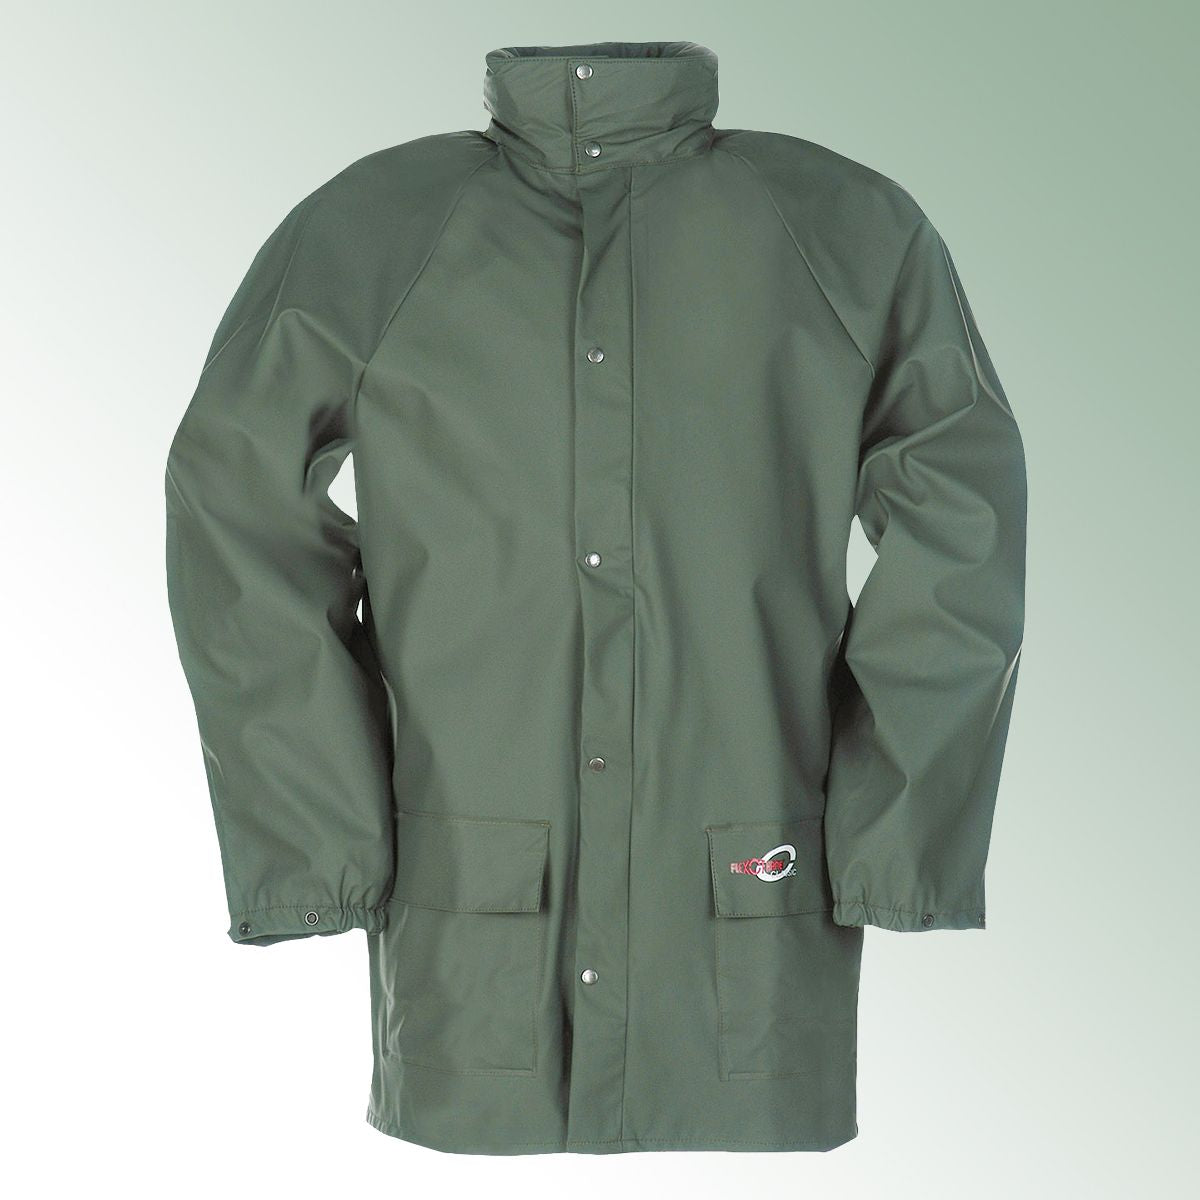 Rainjacket Flexothane size M with hood, olive green model 4820